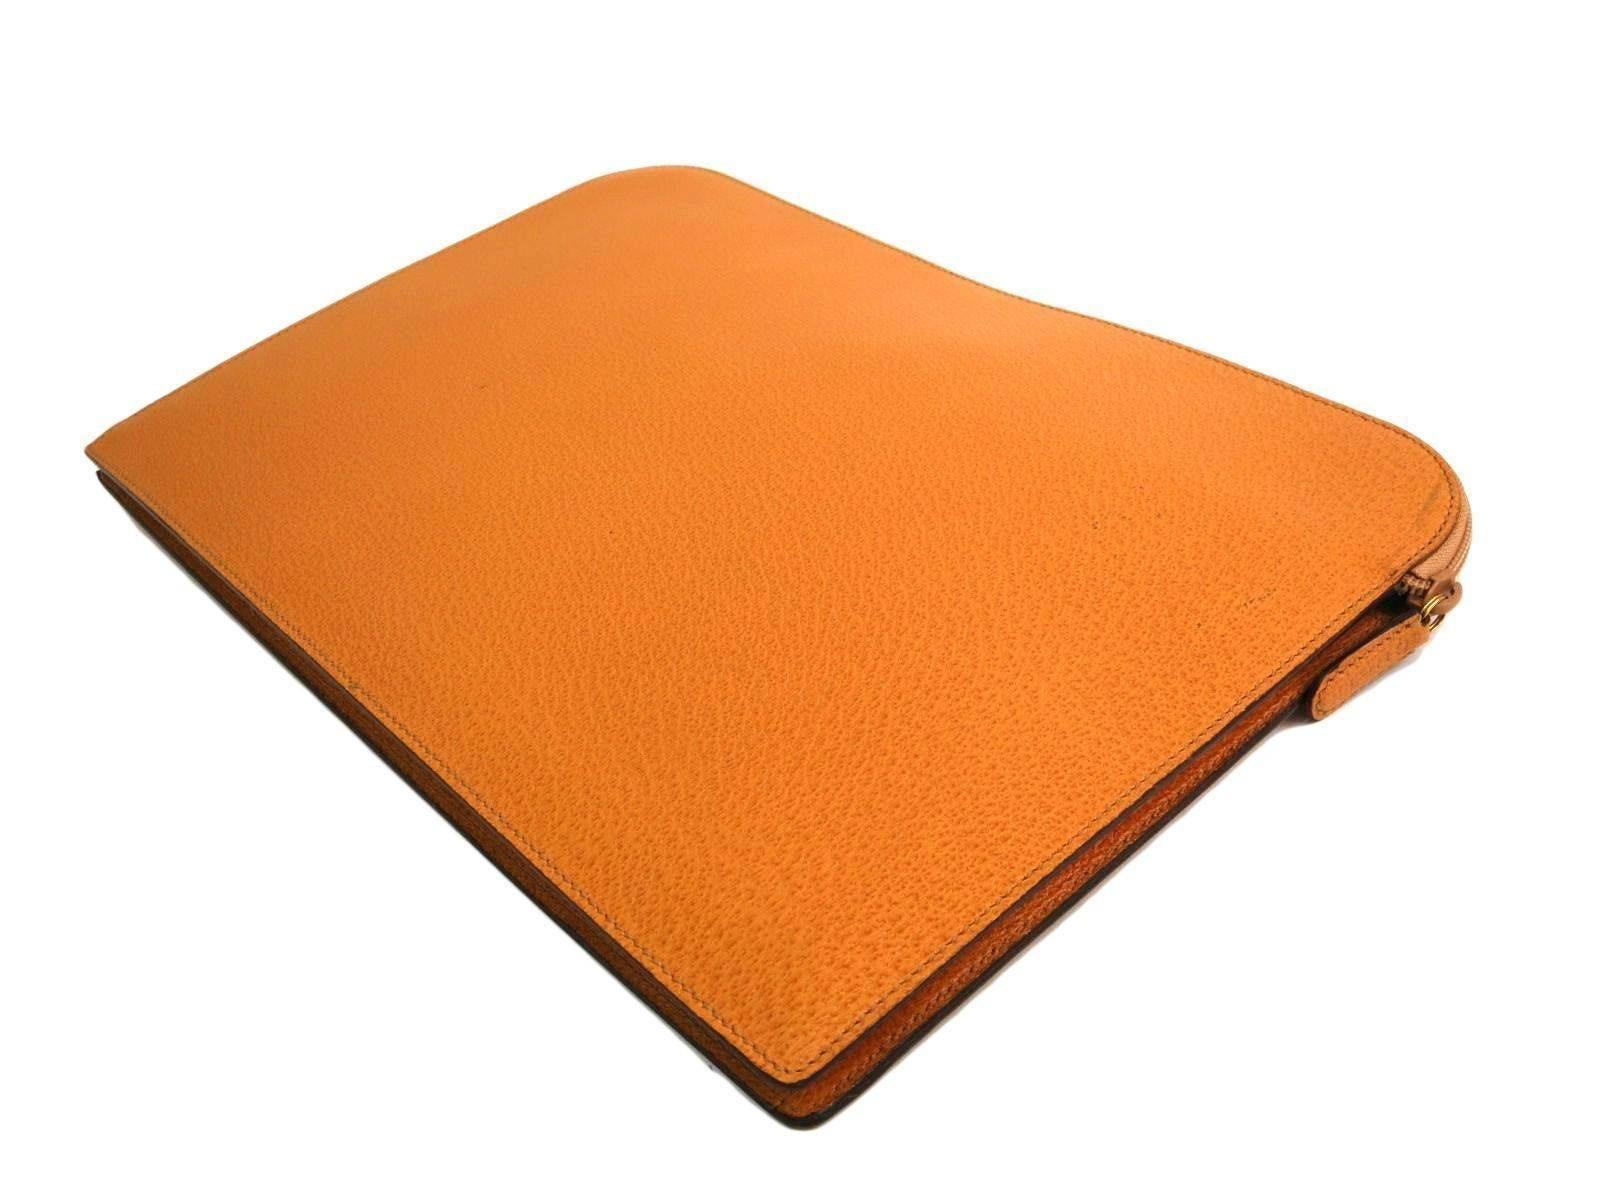 Orange Gucci Leather Men's Women's Zip Around Carryall Laptop Travel Clutch Case Bag